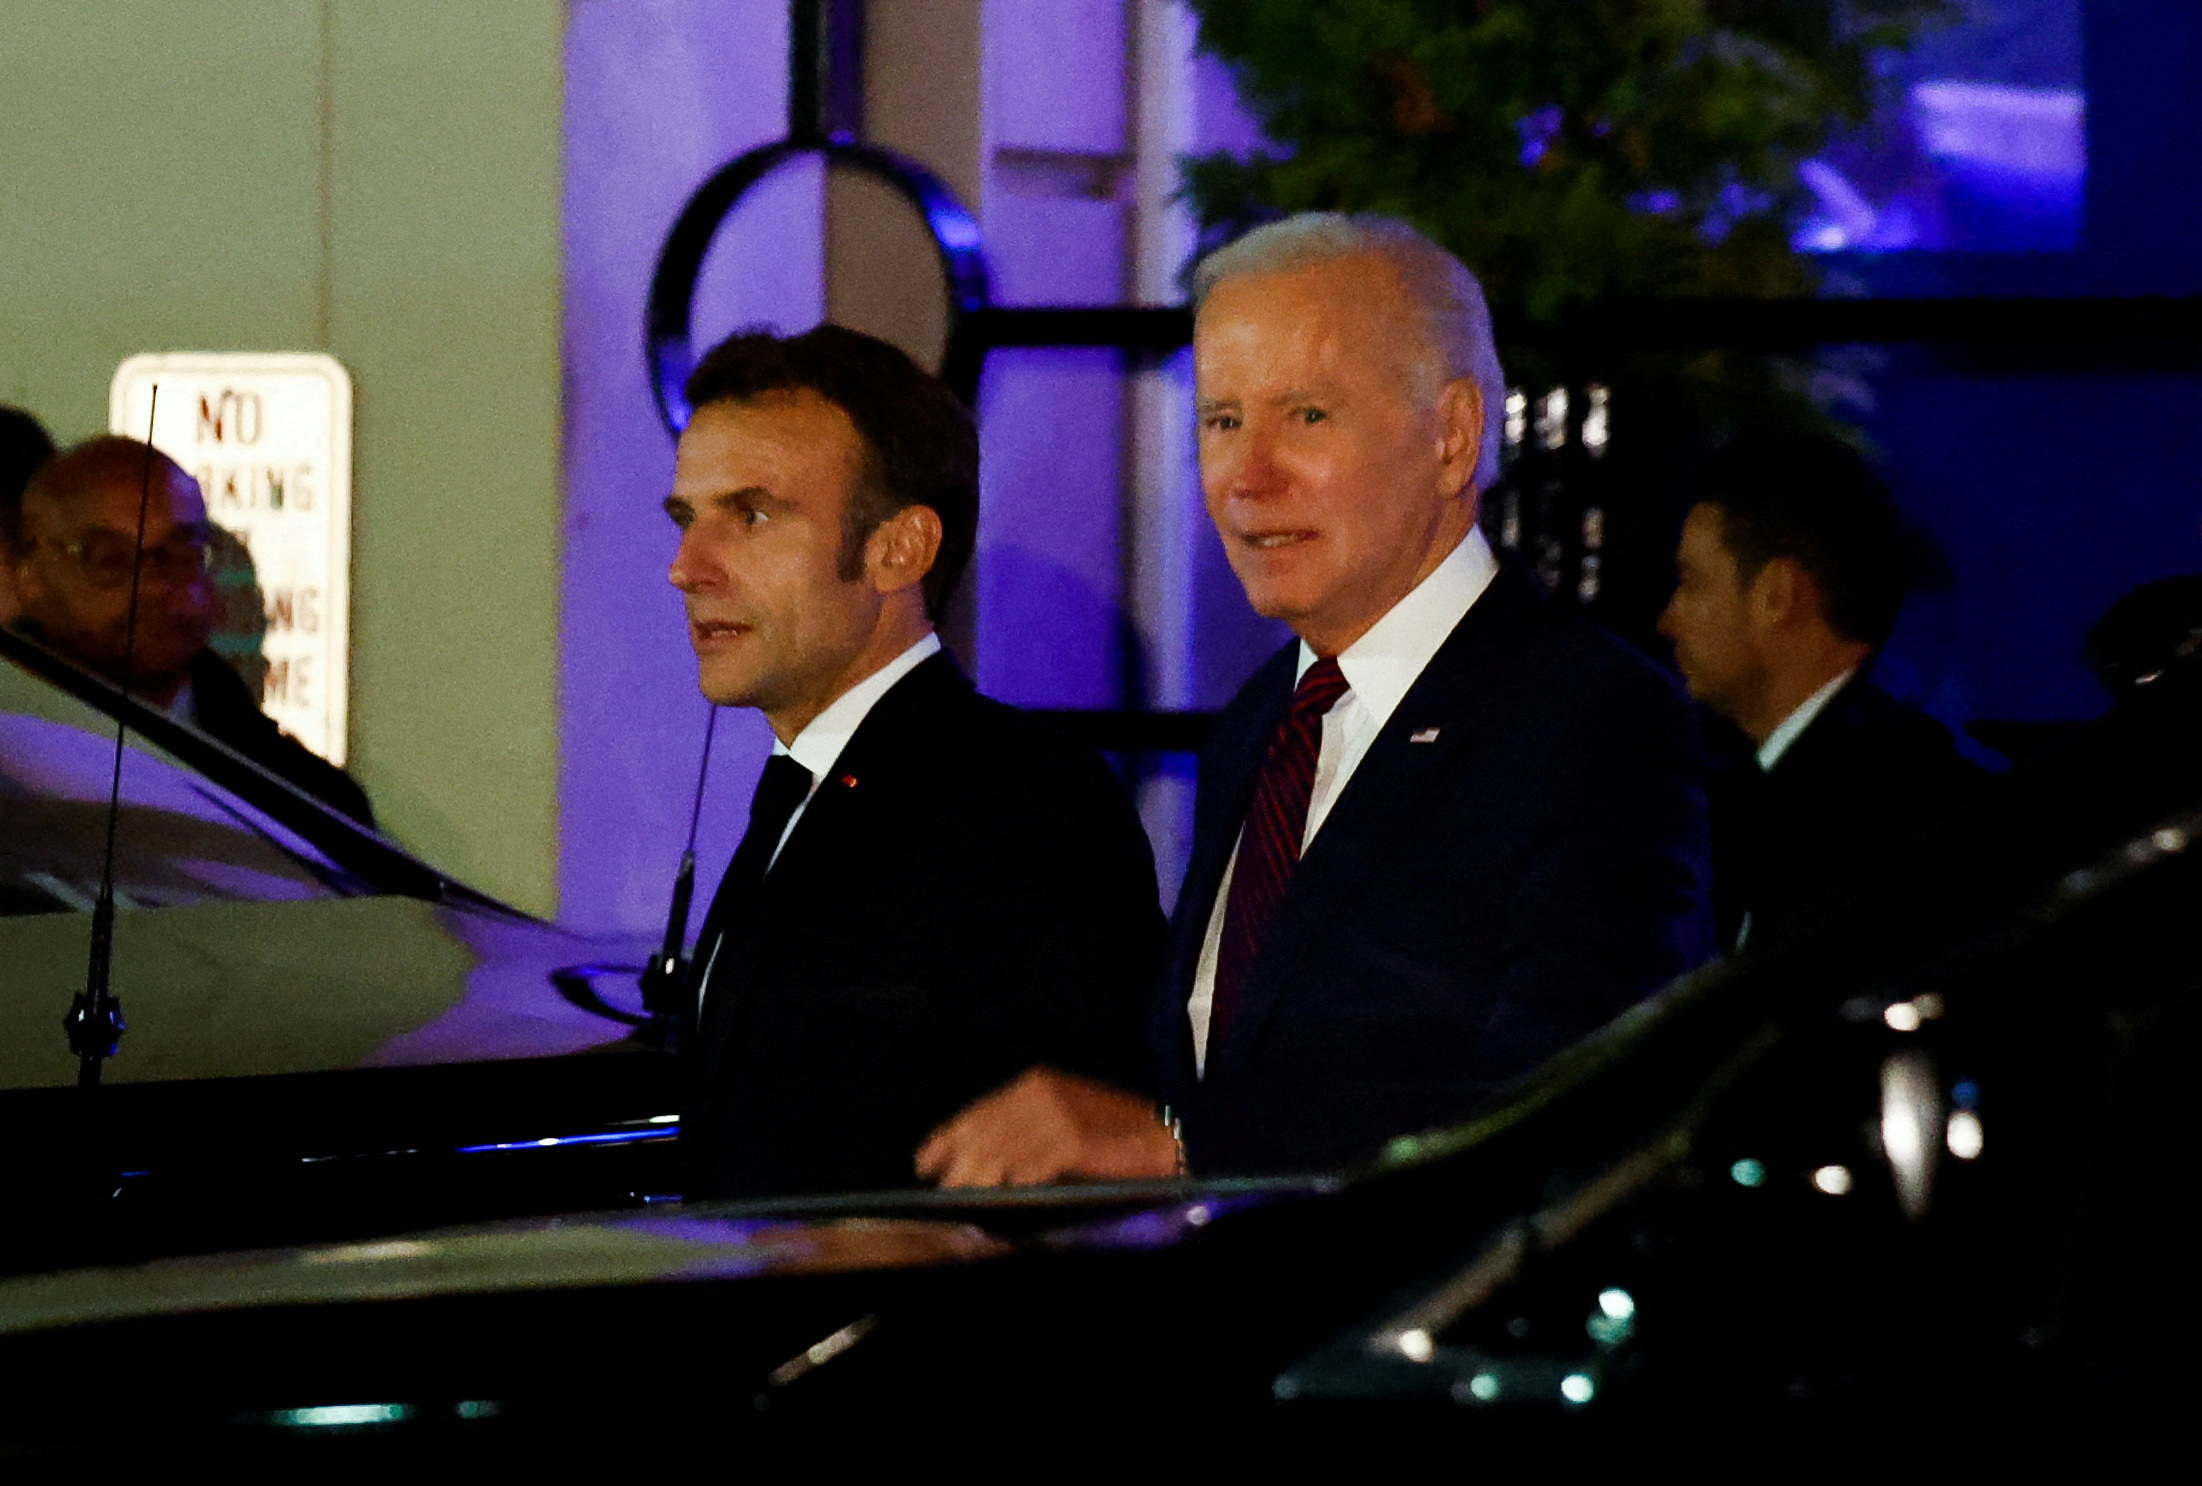 US President Joe Biden and French President Emmanuel Macron dine at the Fiola Mare restaurant